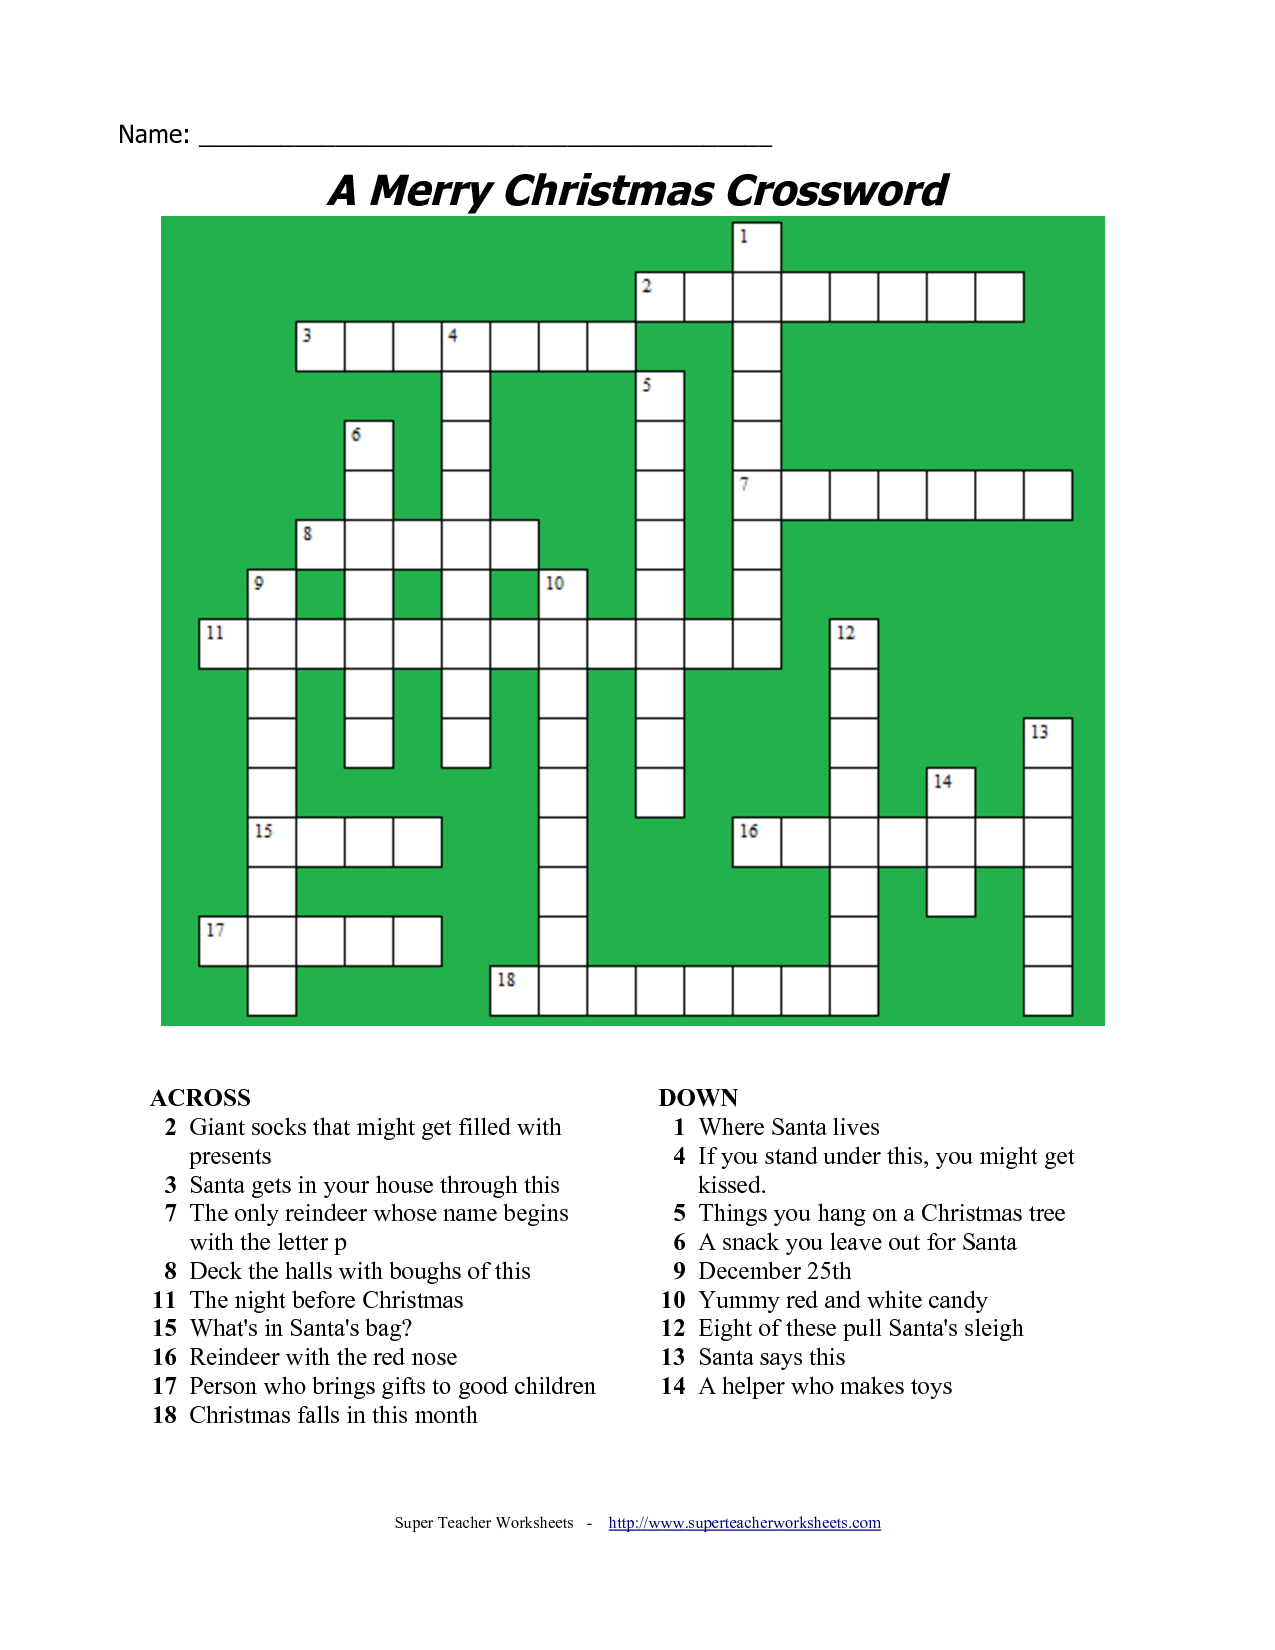 20 Fun Printable Christmas Crossword Puzzles | Kittybabylove - Christmas Printable Crossword Puzzles Adults